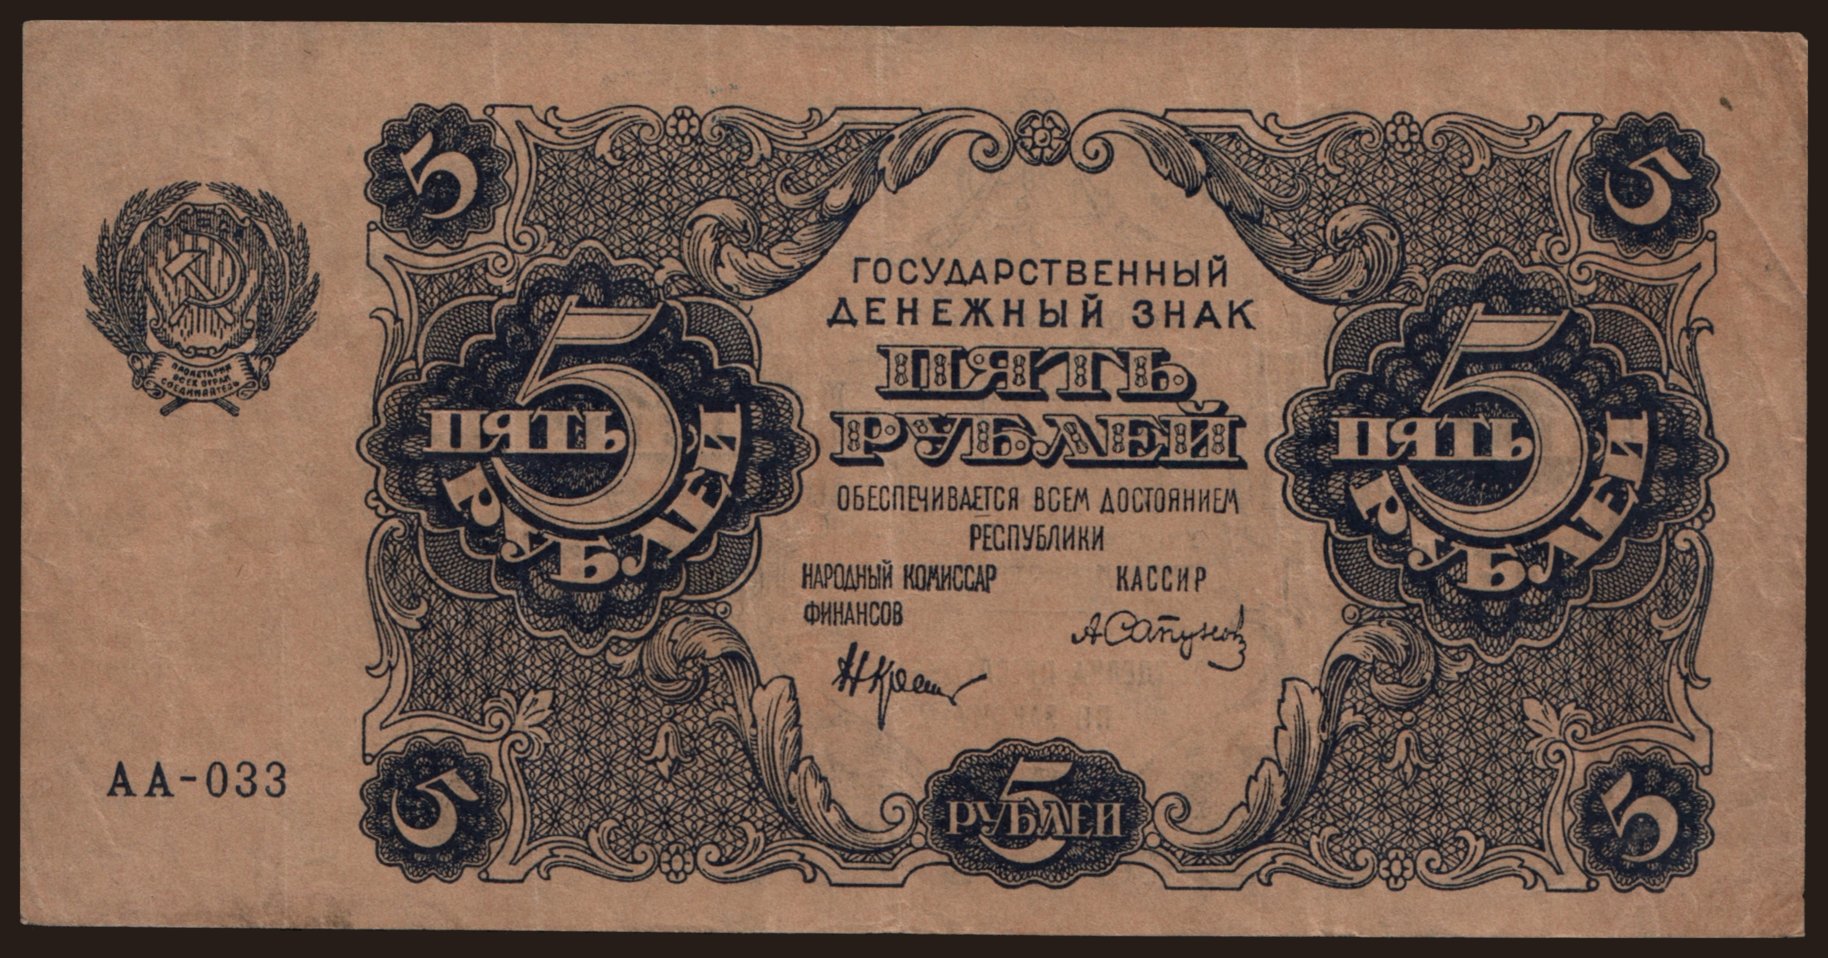 5 rubel, 1922